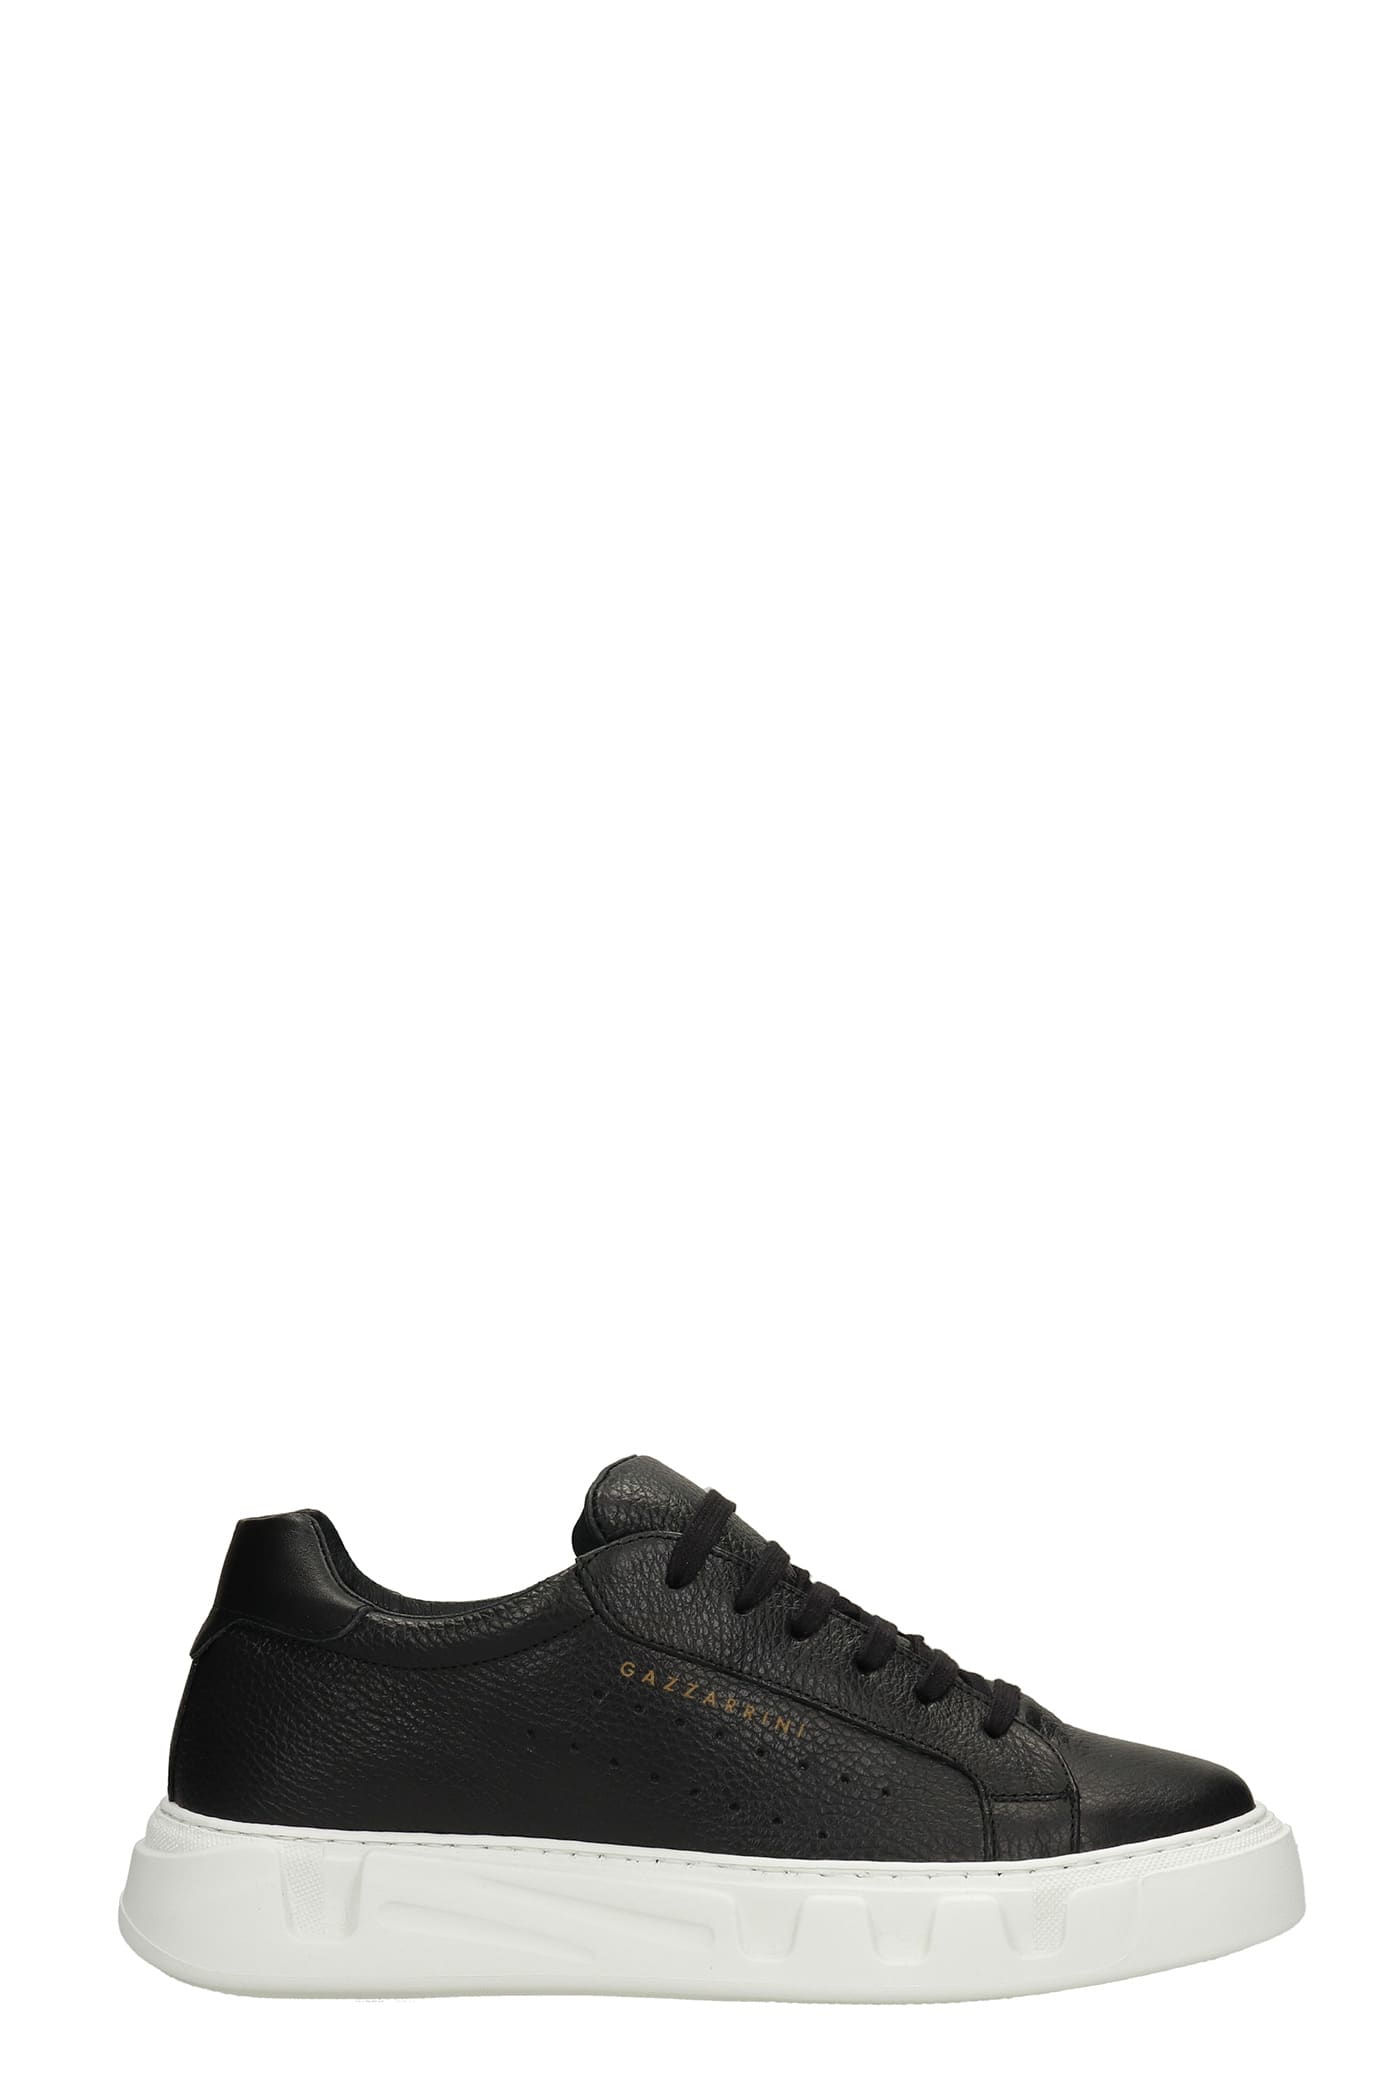 Gazzarrini Sneakers In Black Leather